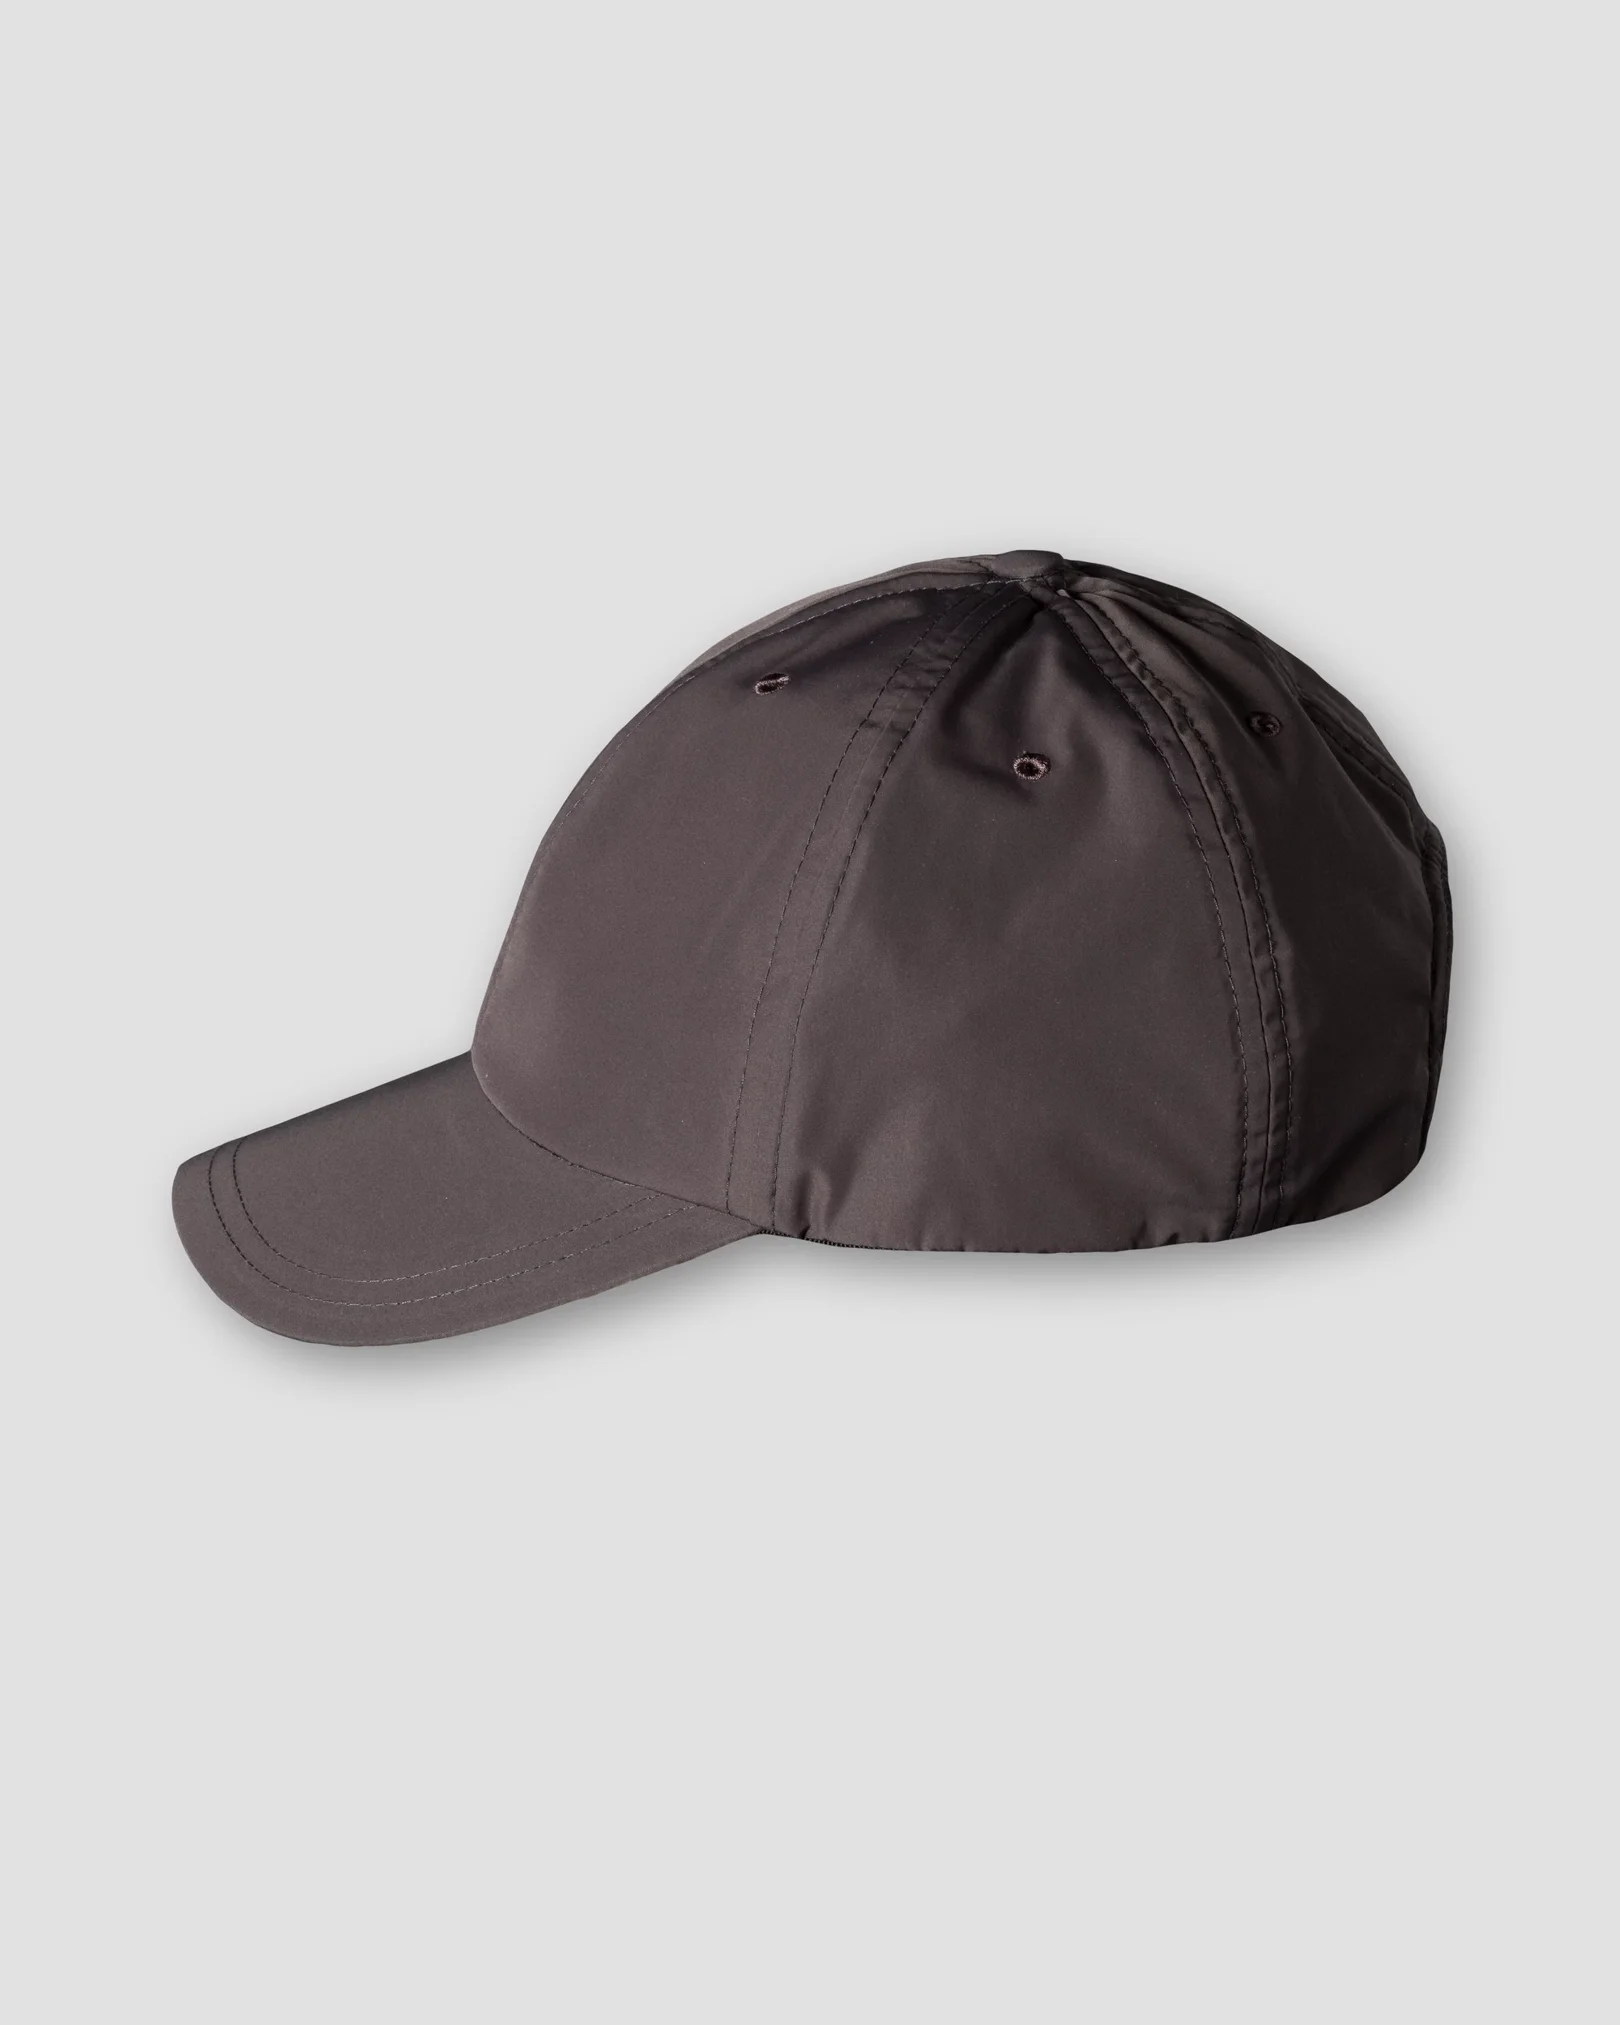 Eton - dark gray sports cap